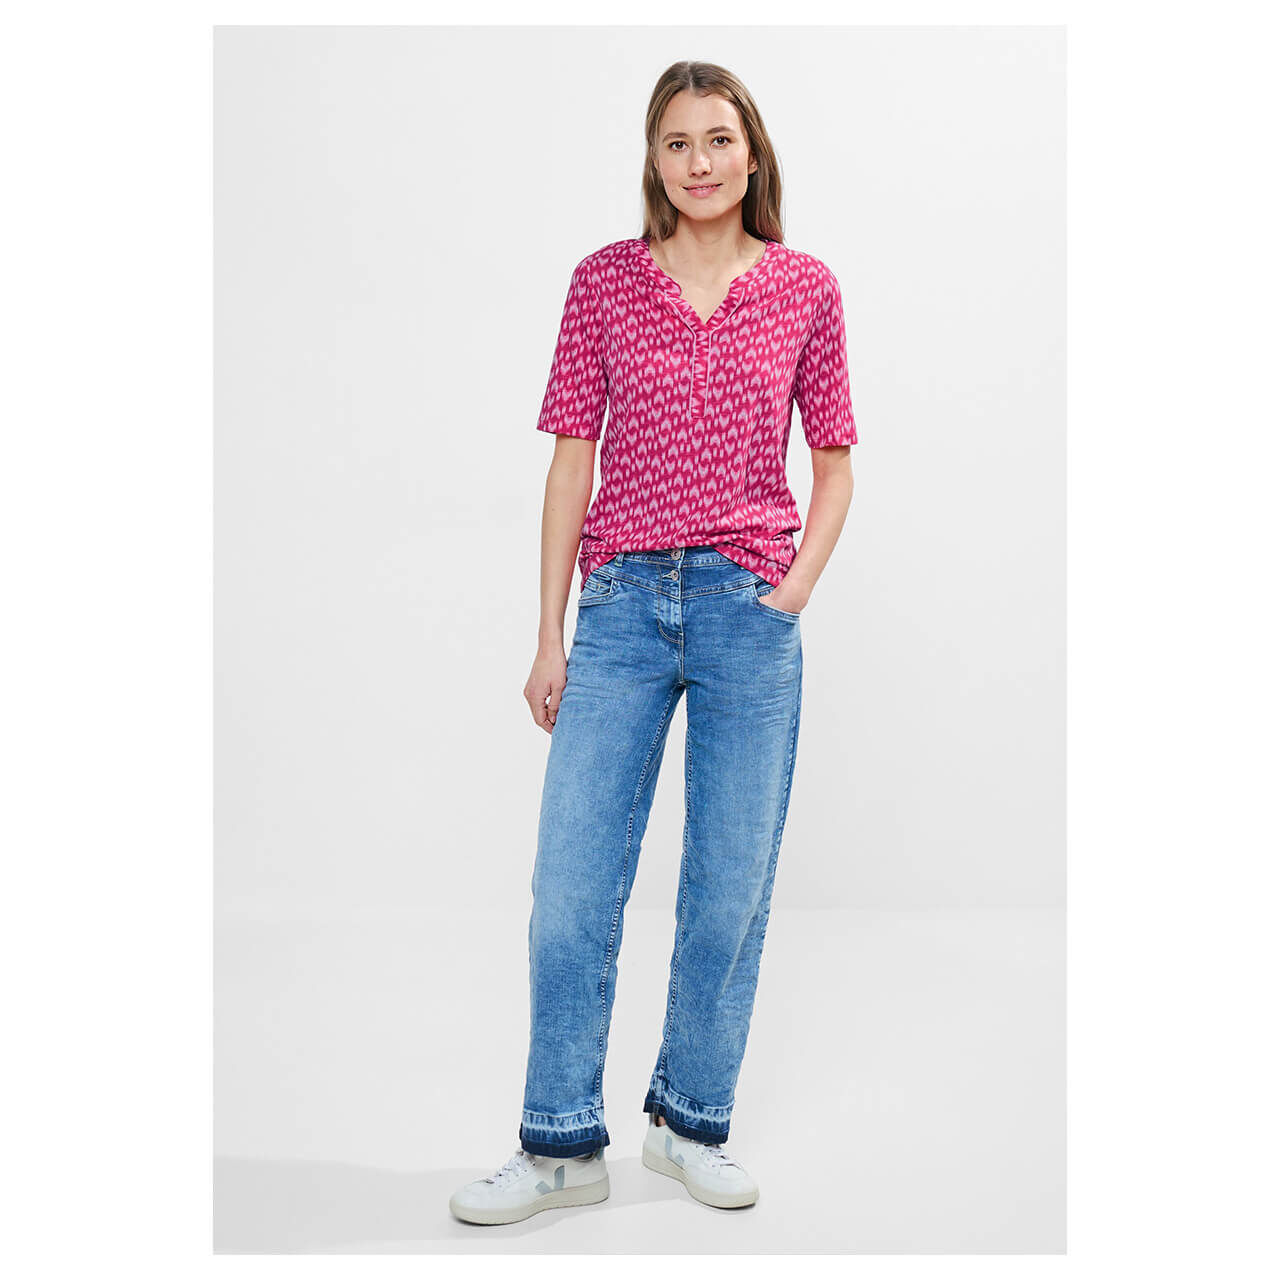 Cecil Damen T-Shirt Minimal Tunic Splitneck pink sorbet printed